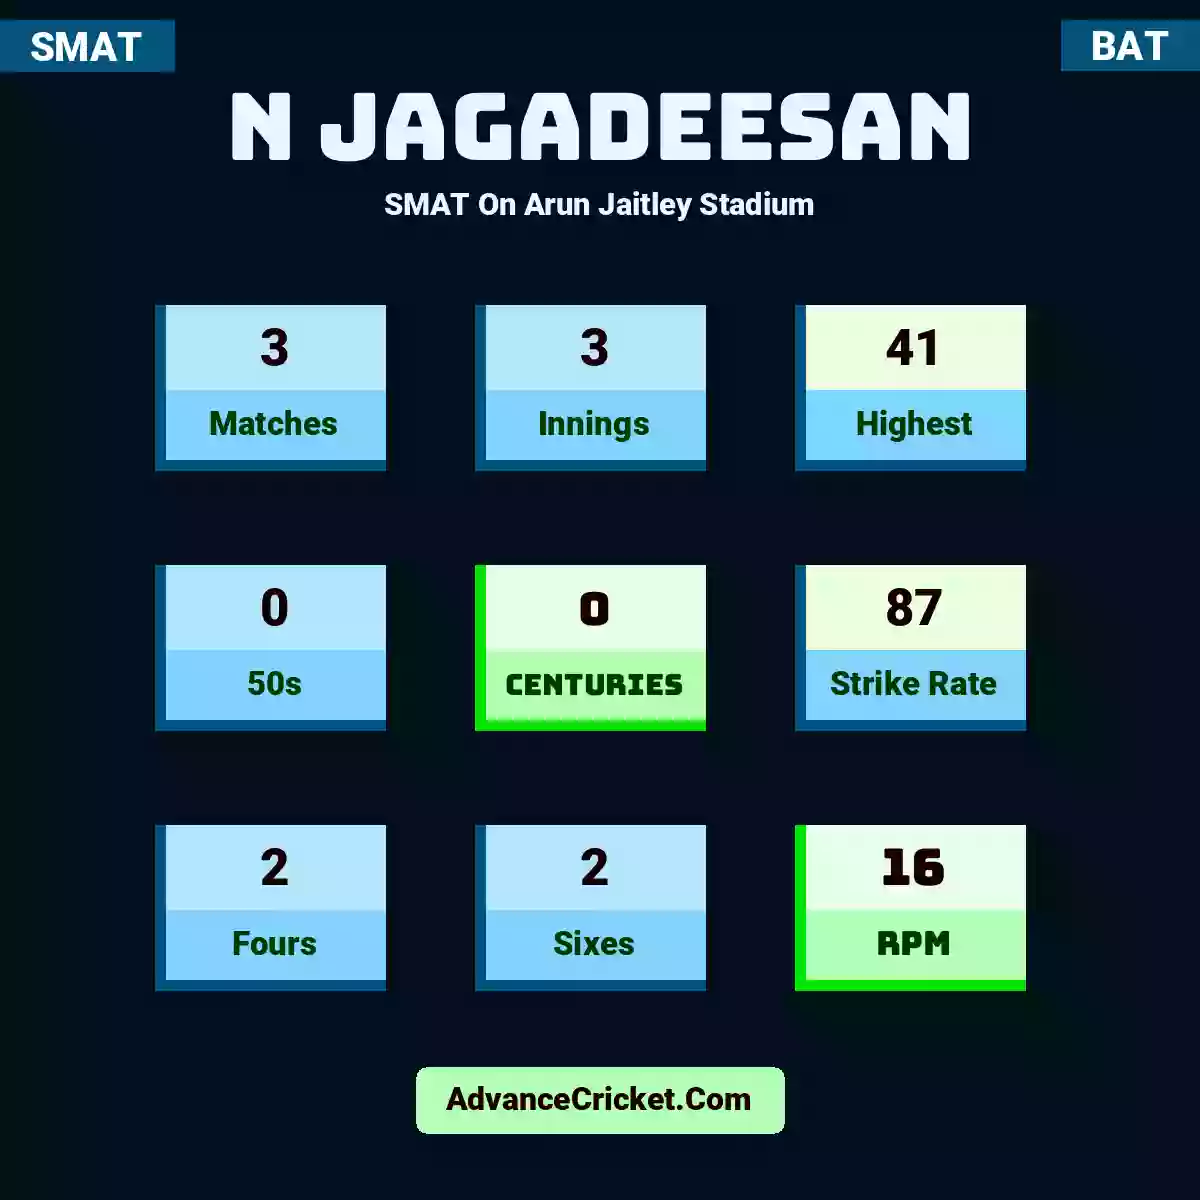 N Jagadeesan SMAT  On Arun Jaitley Stadium, N Jagadeesan played 3 matches, scored 41 runs as highest, 0 half-centuries, and 0 centuries, with a strike rate of 87. N.Jagadeesan hit 2 fours and 2 sixes, with an RPM of 16.